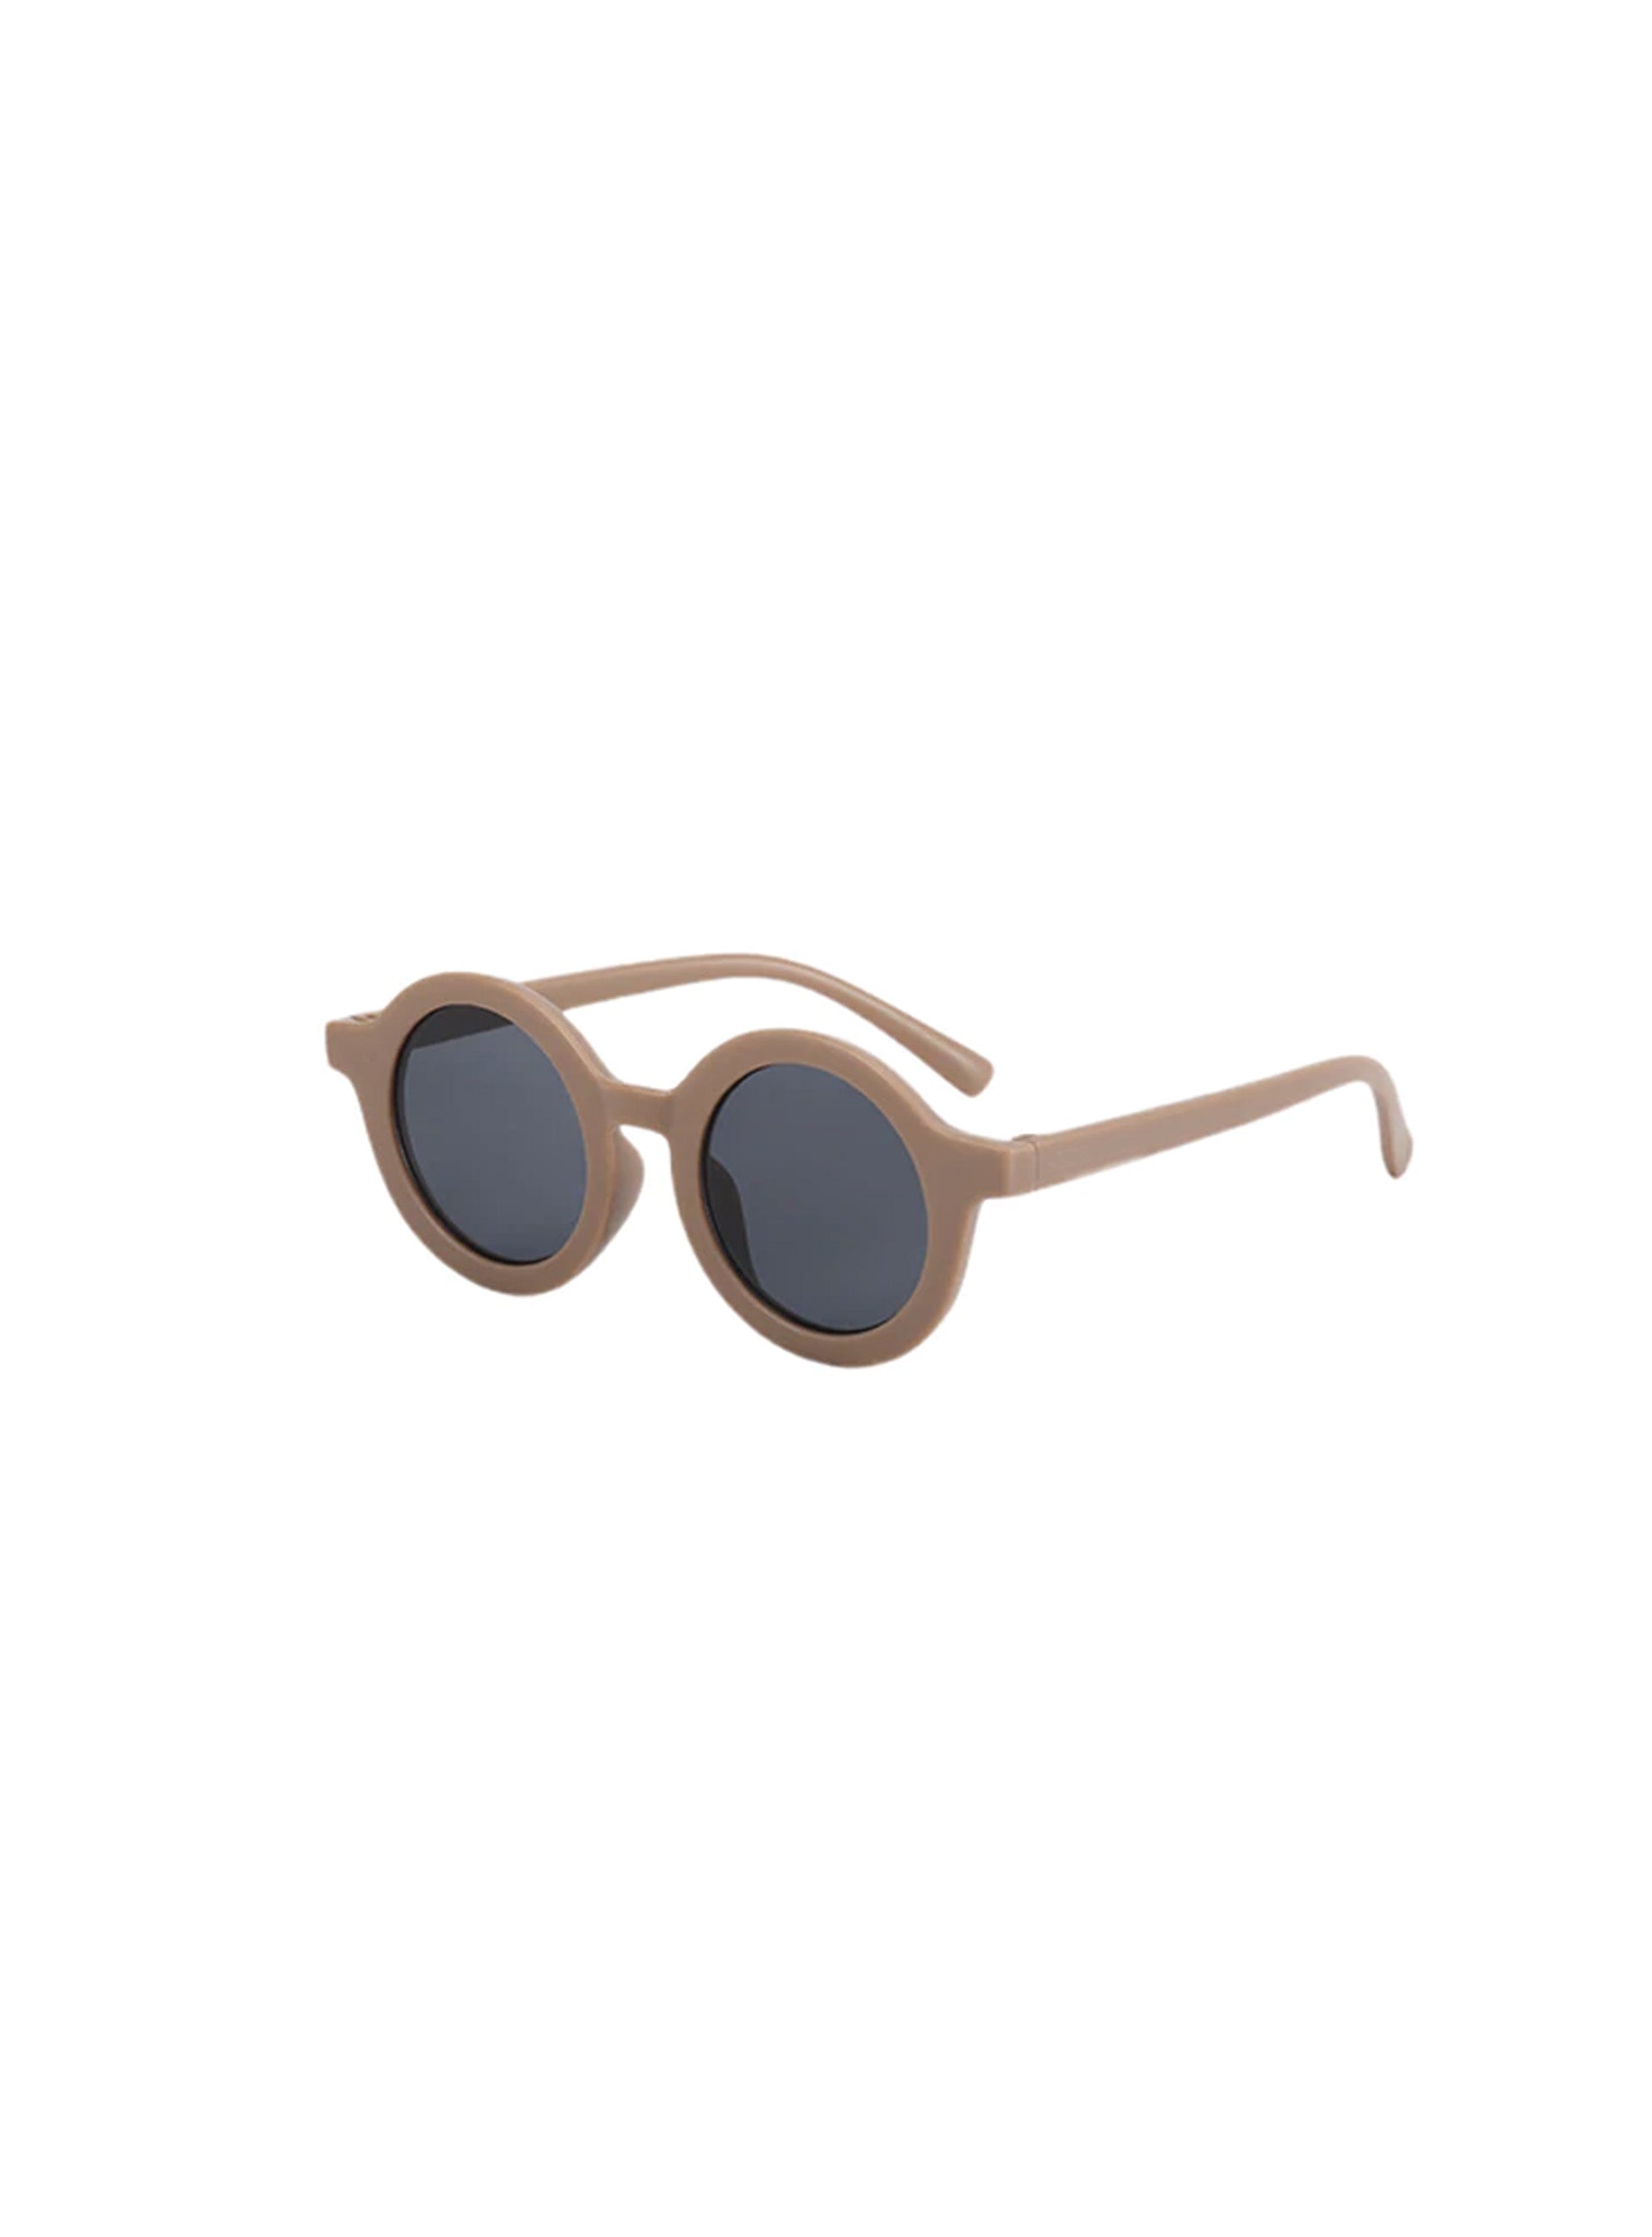 coffee brown round sunglasses